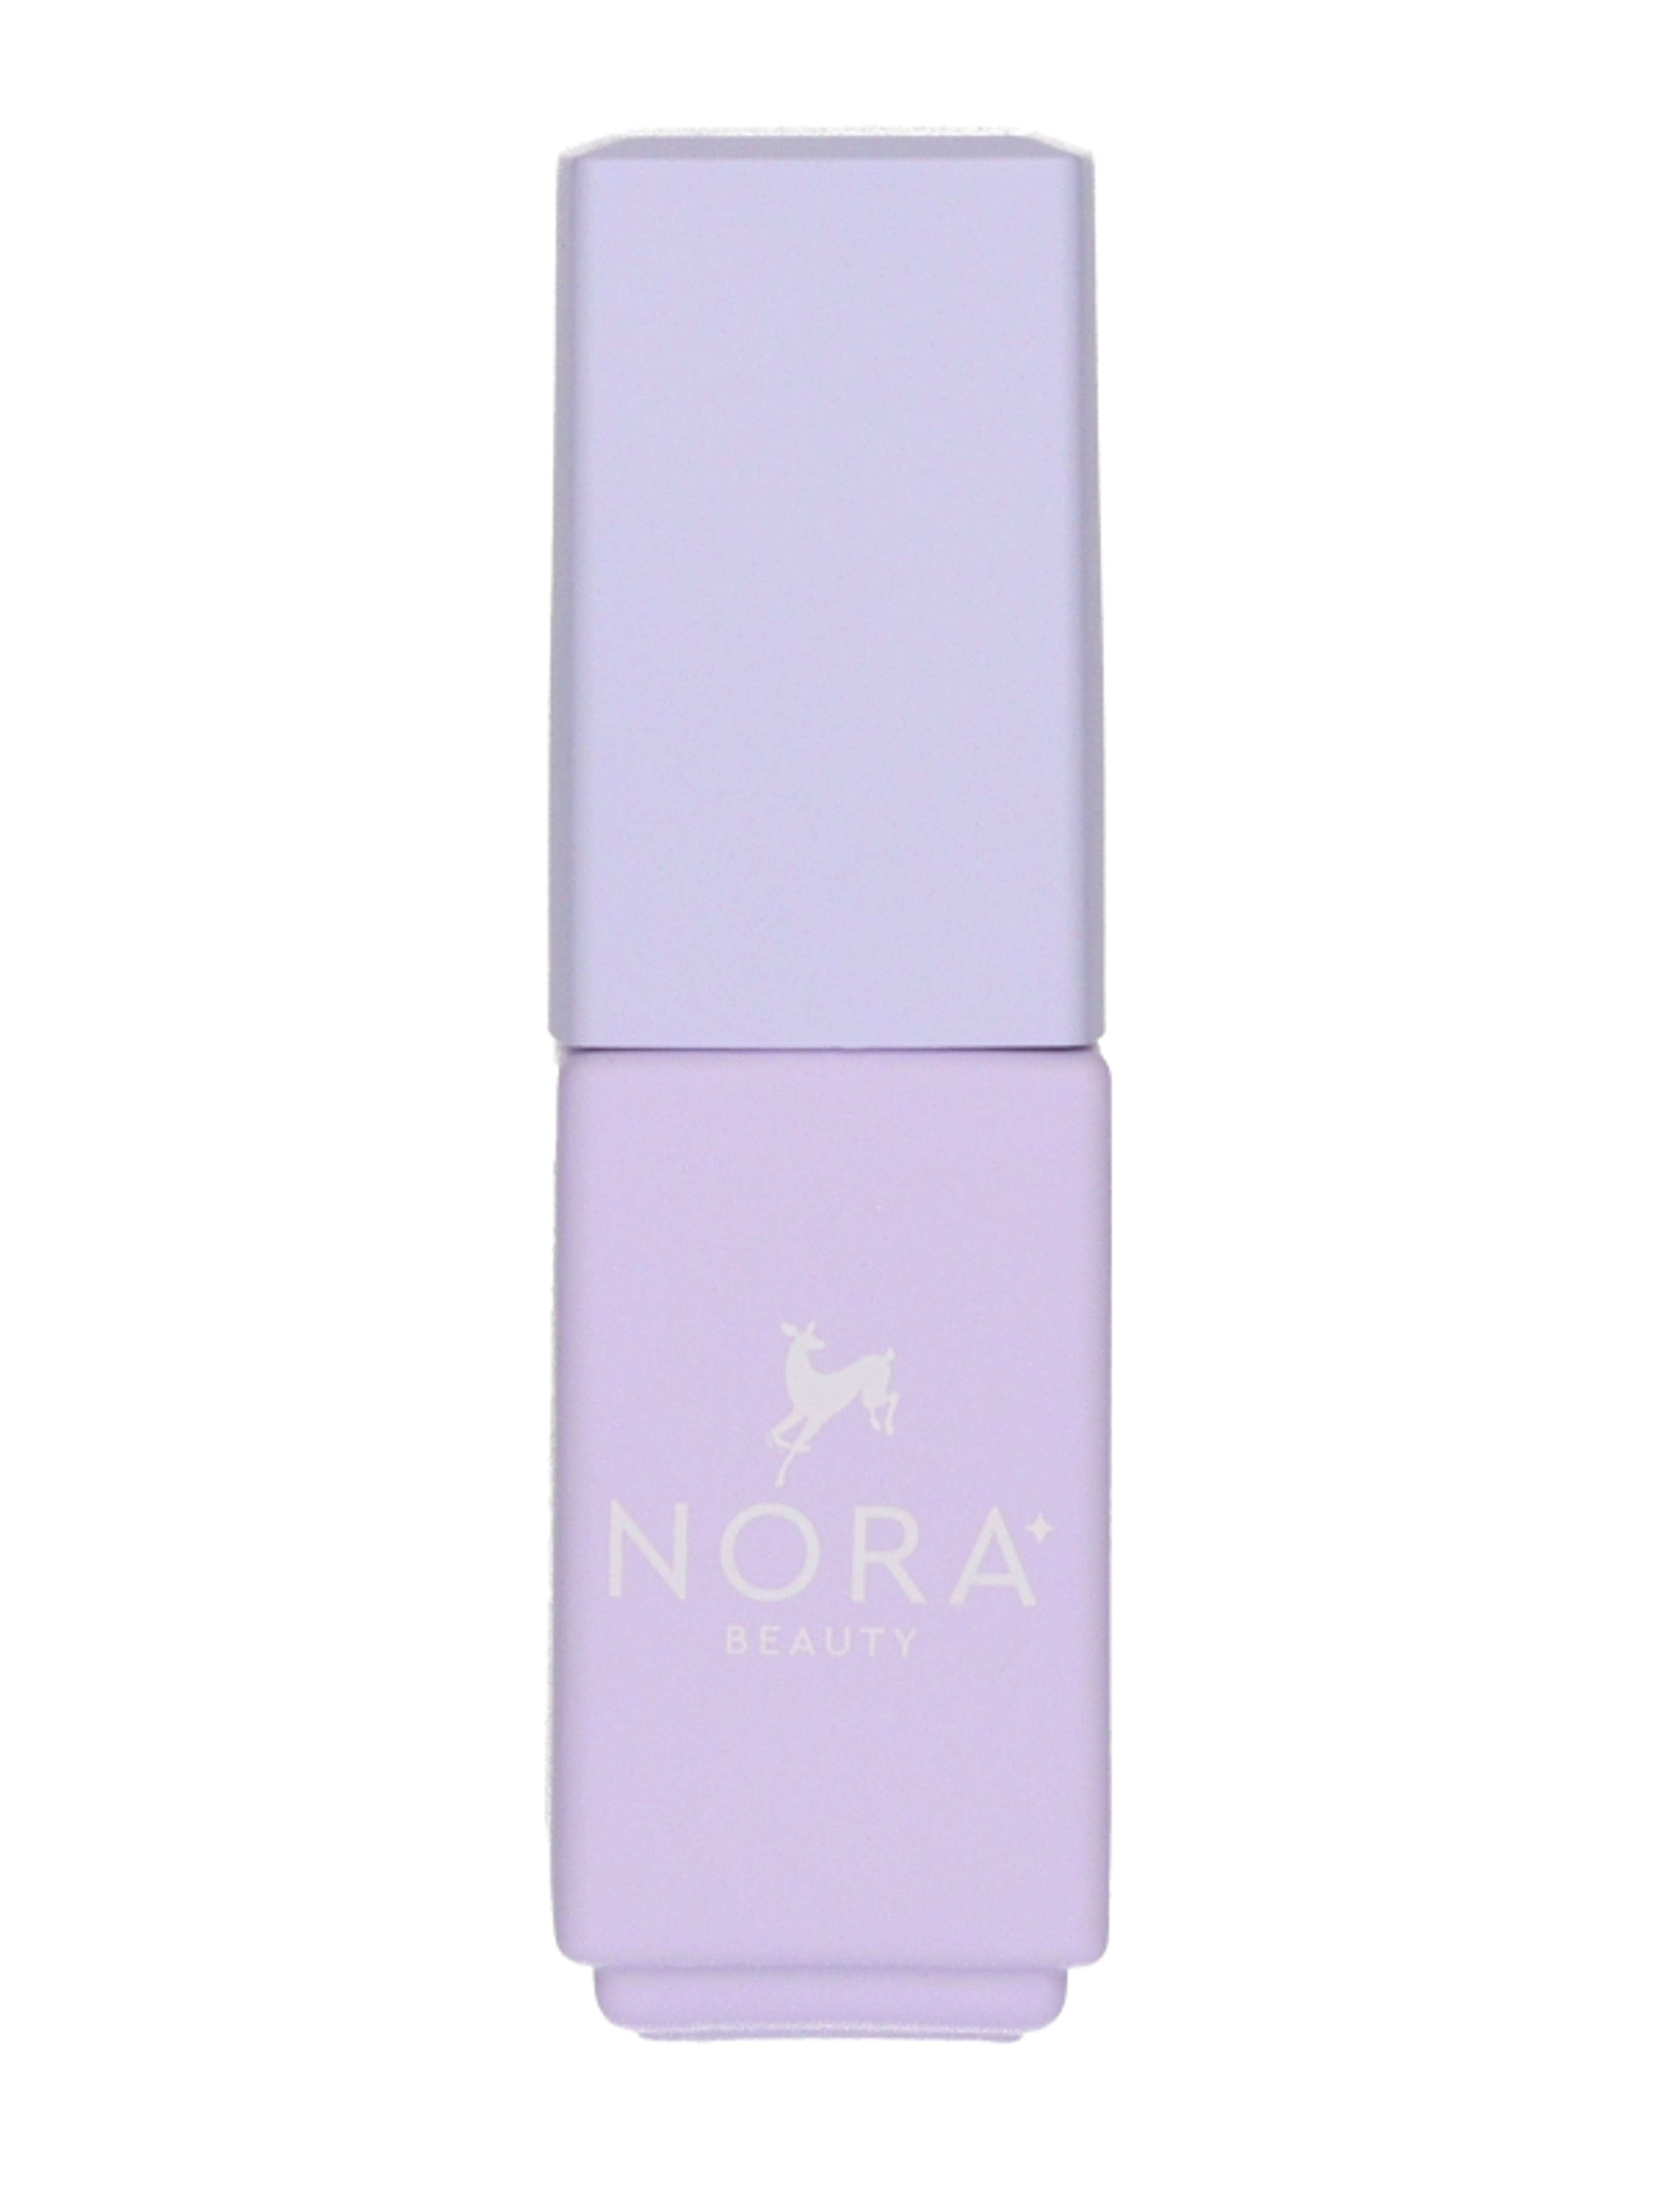 Nora Beauty UV lakkzselé /hd-04 creamy coral - 1 db-3